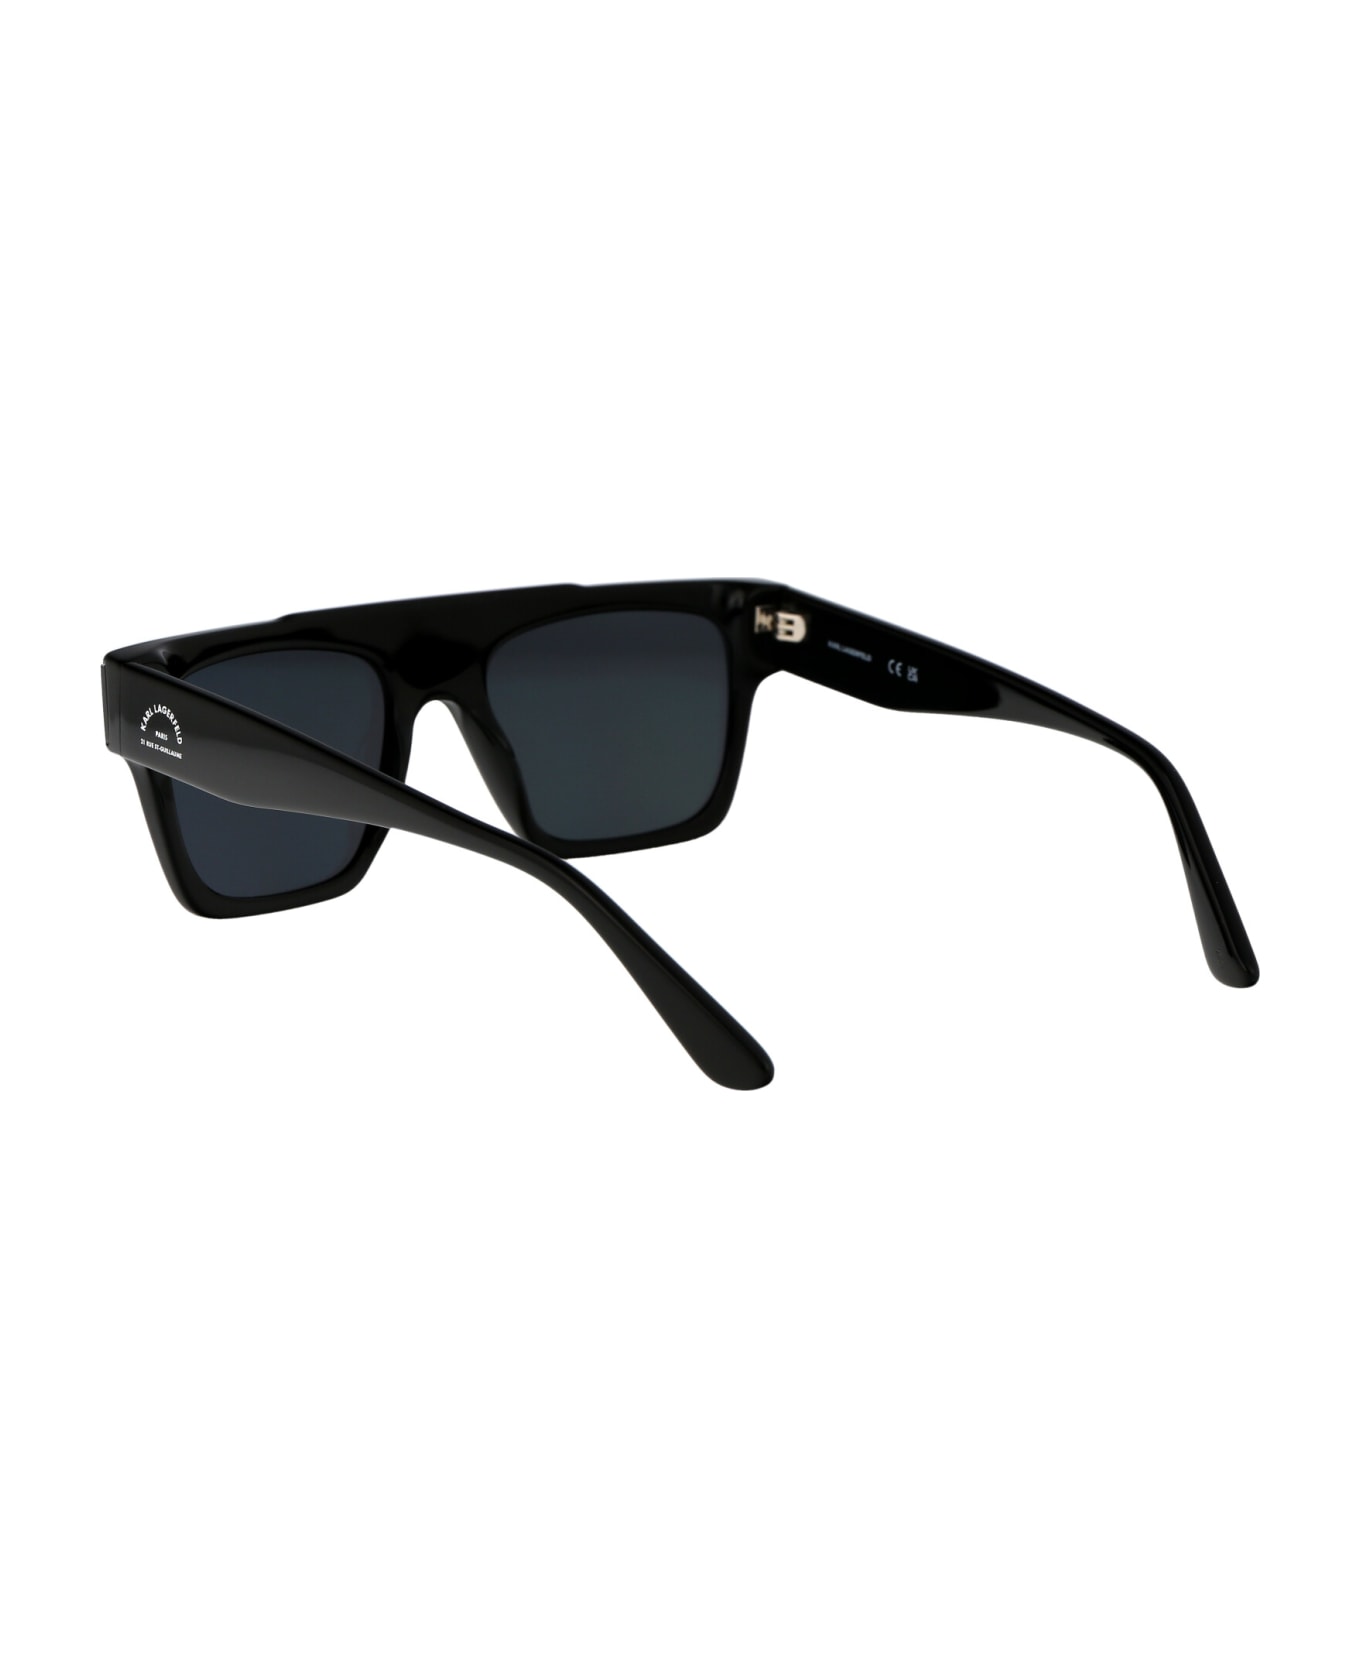 Karl Lagerfeld Kl6090s Sunglasses - 001 BLACK サングラス